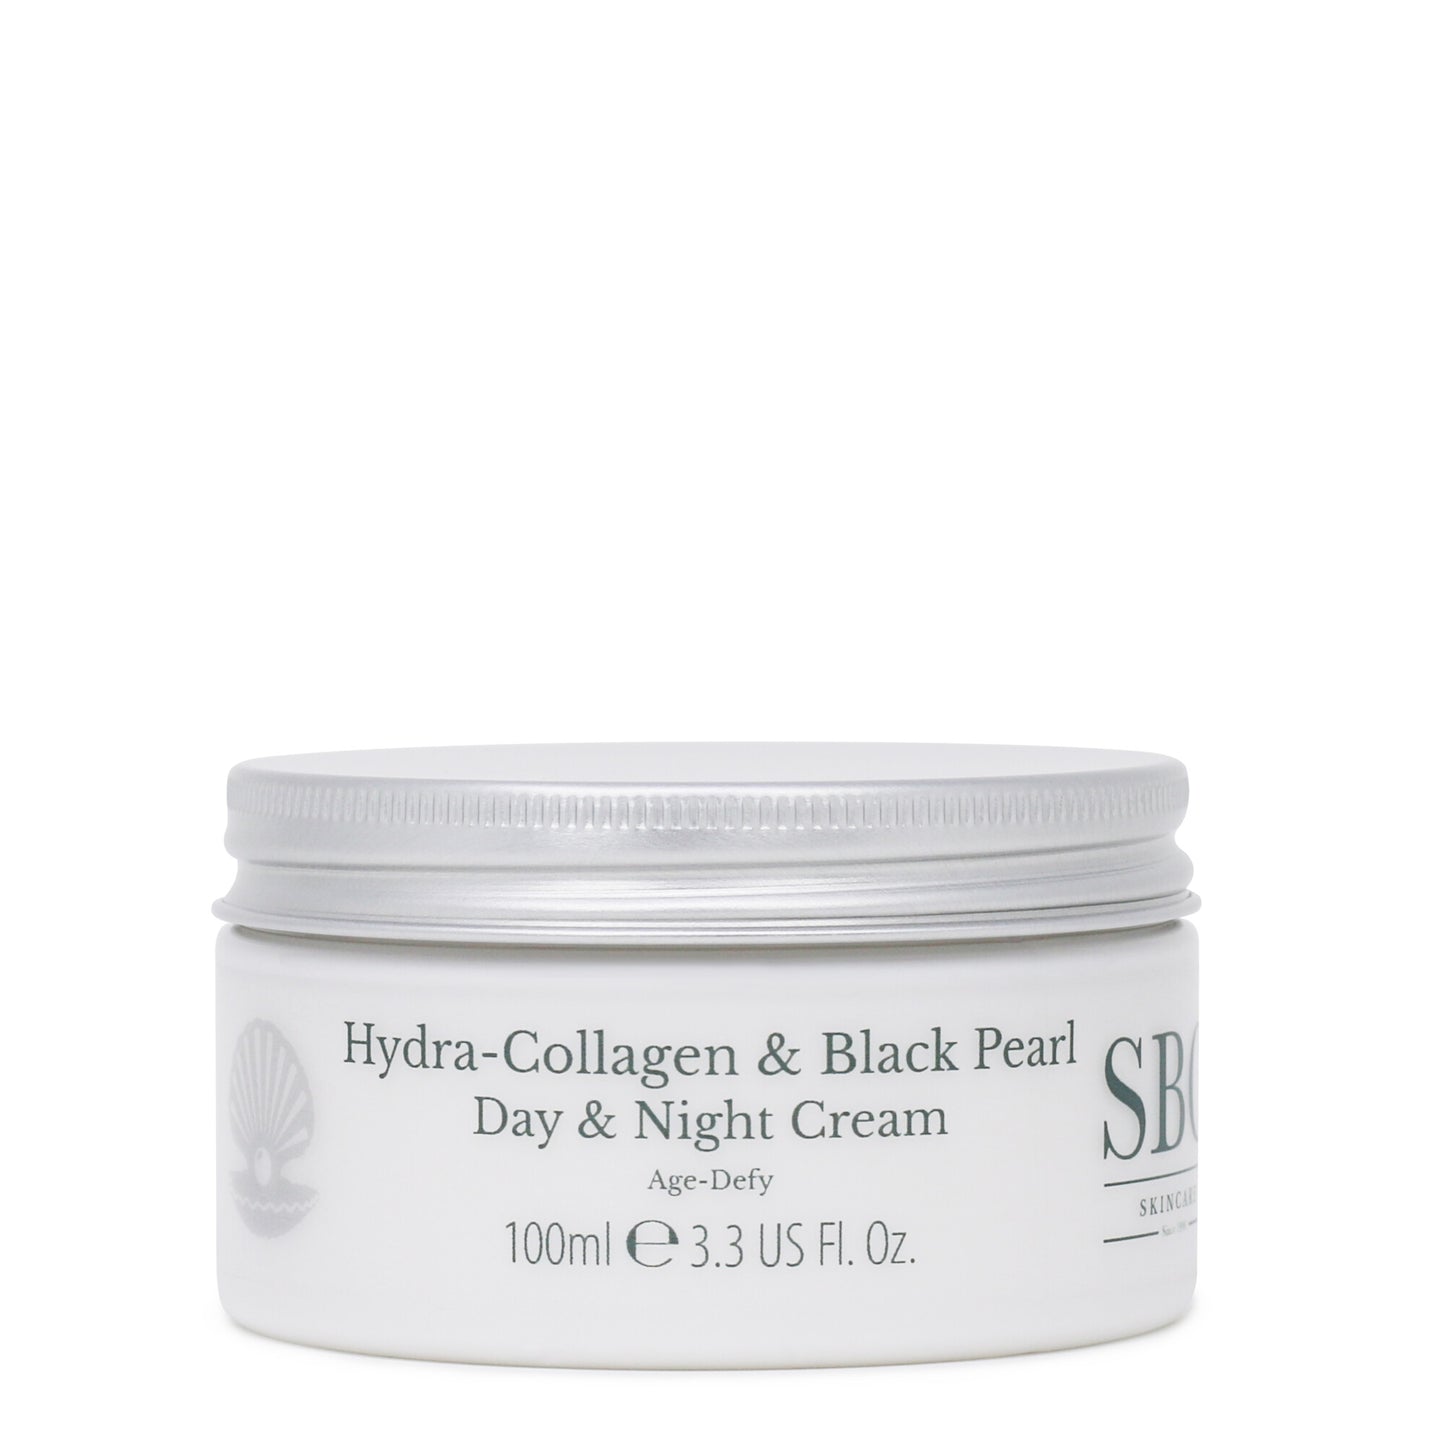 100ml Hydra-Collagen & Black Pearl Day & Night Cream  on a white background